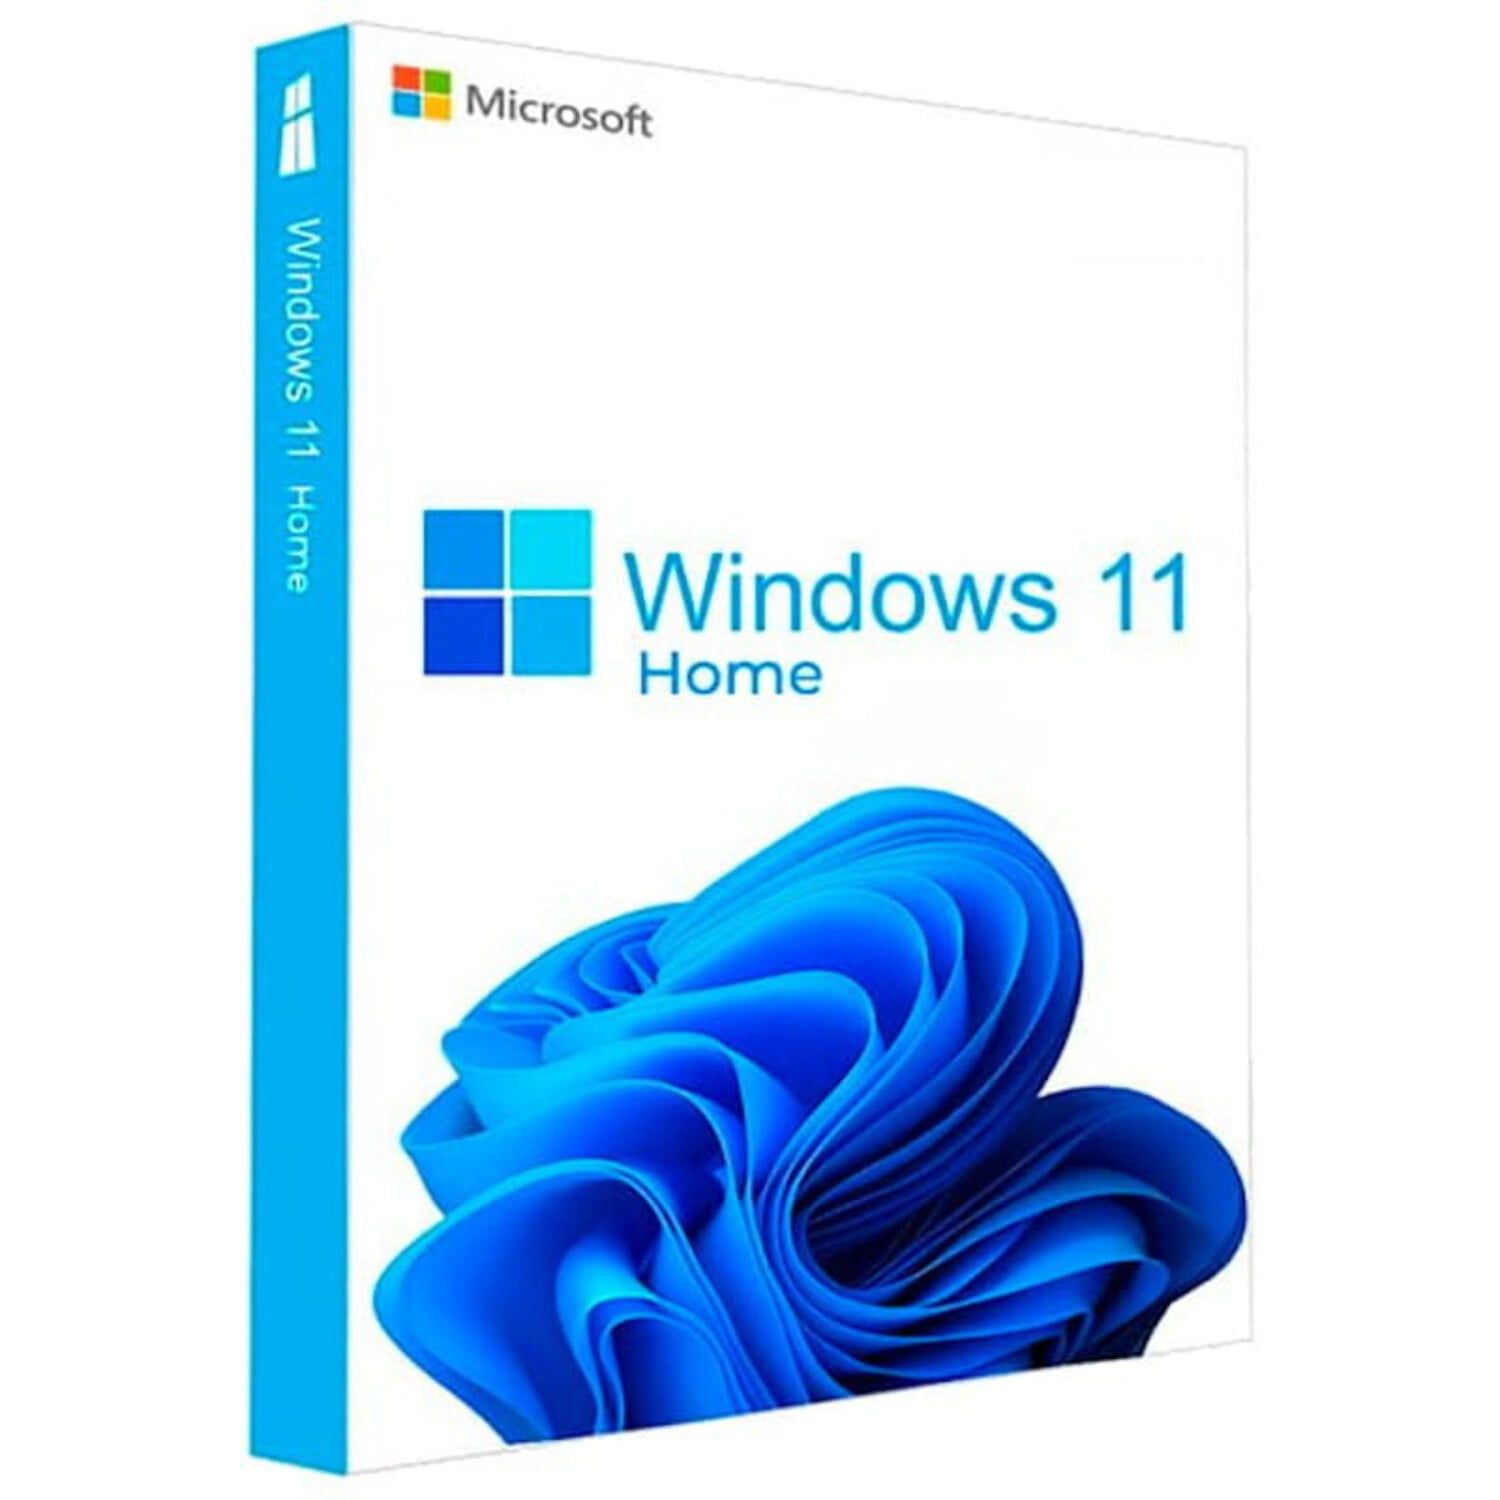 MS SB Windows 11 Home 64bit [DE] DVD_1